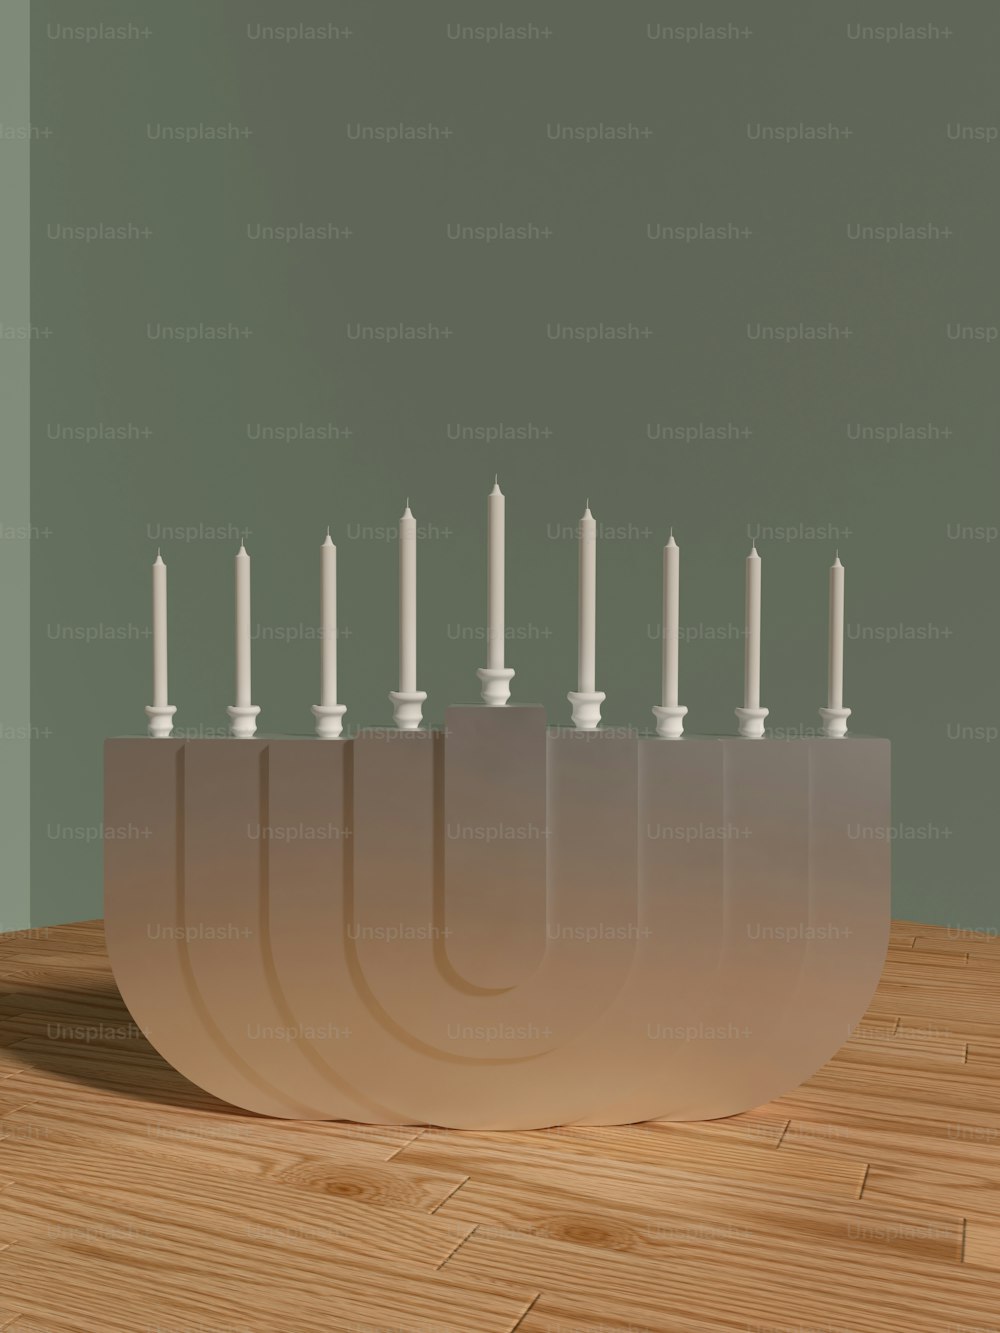 Un grupo de velas blancas sentadas dentro de un cuenco